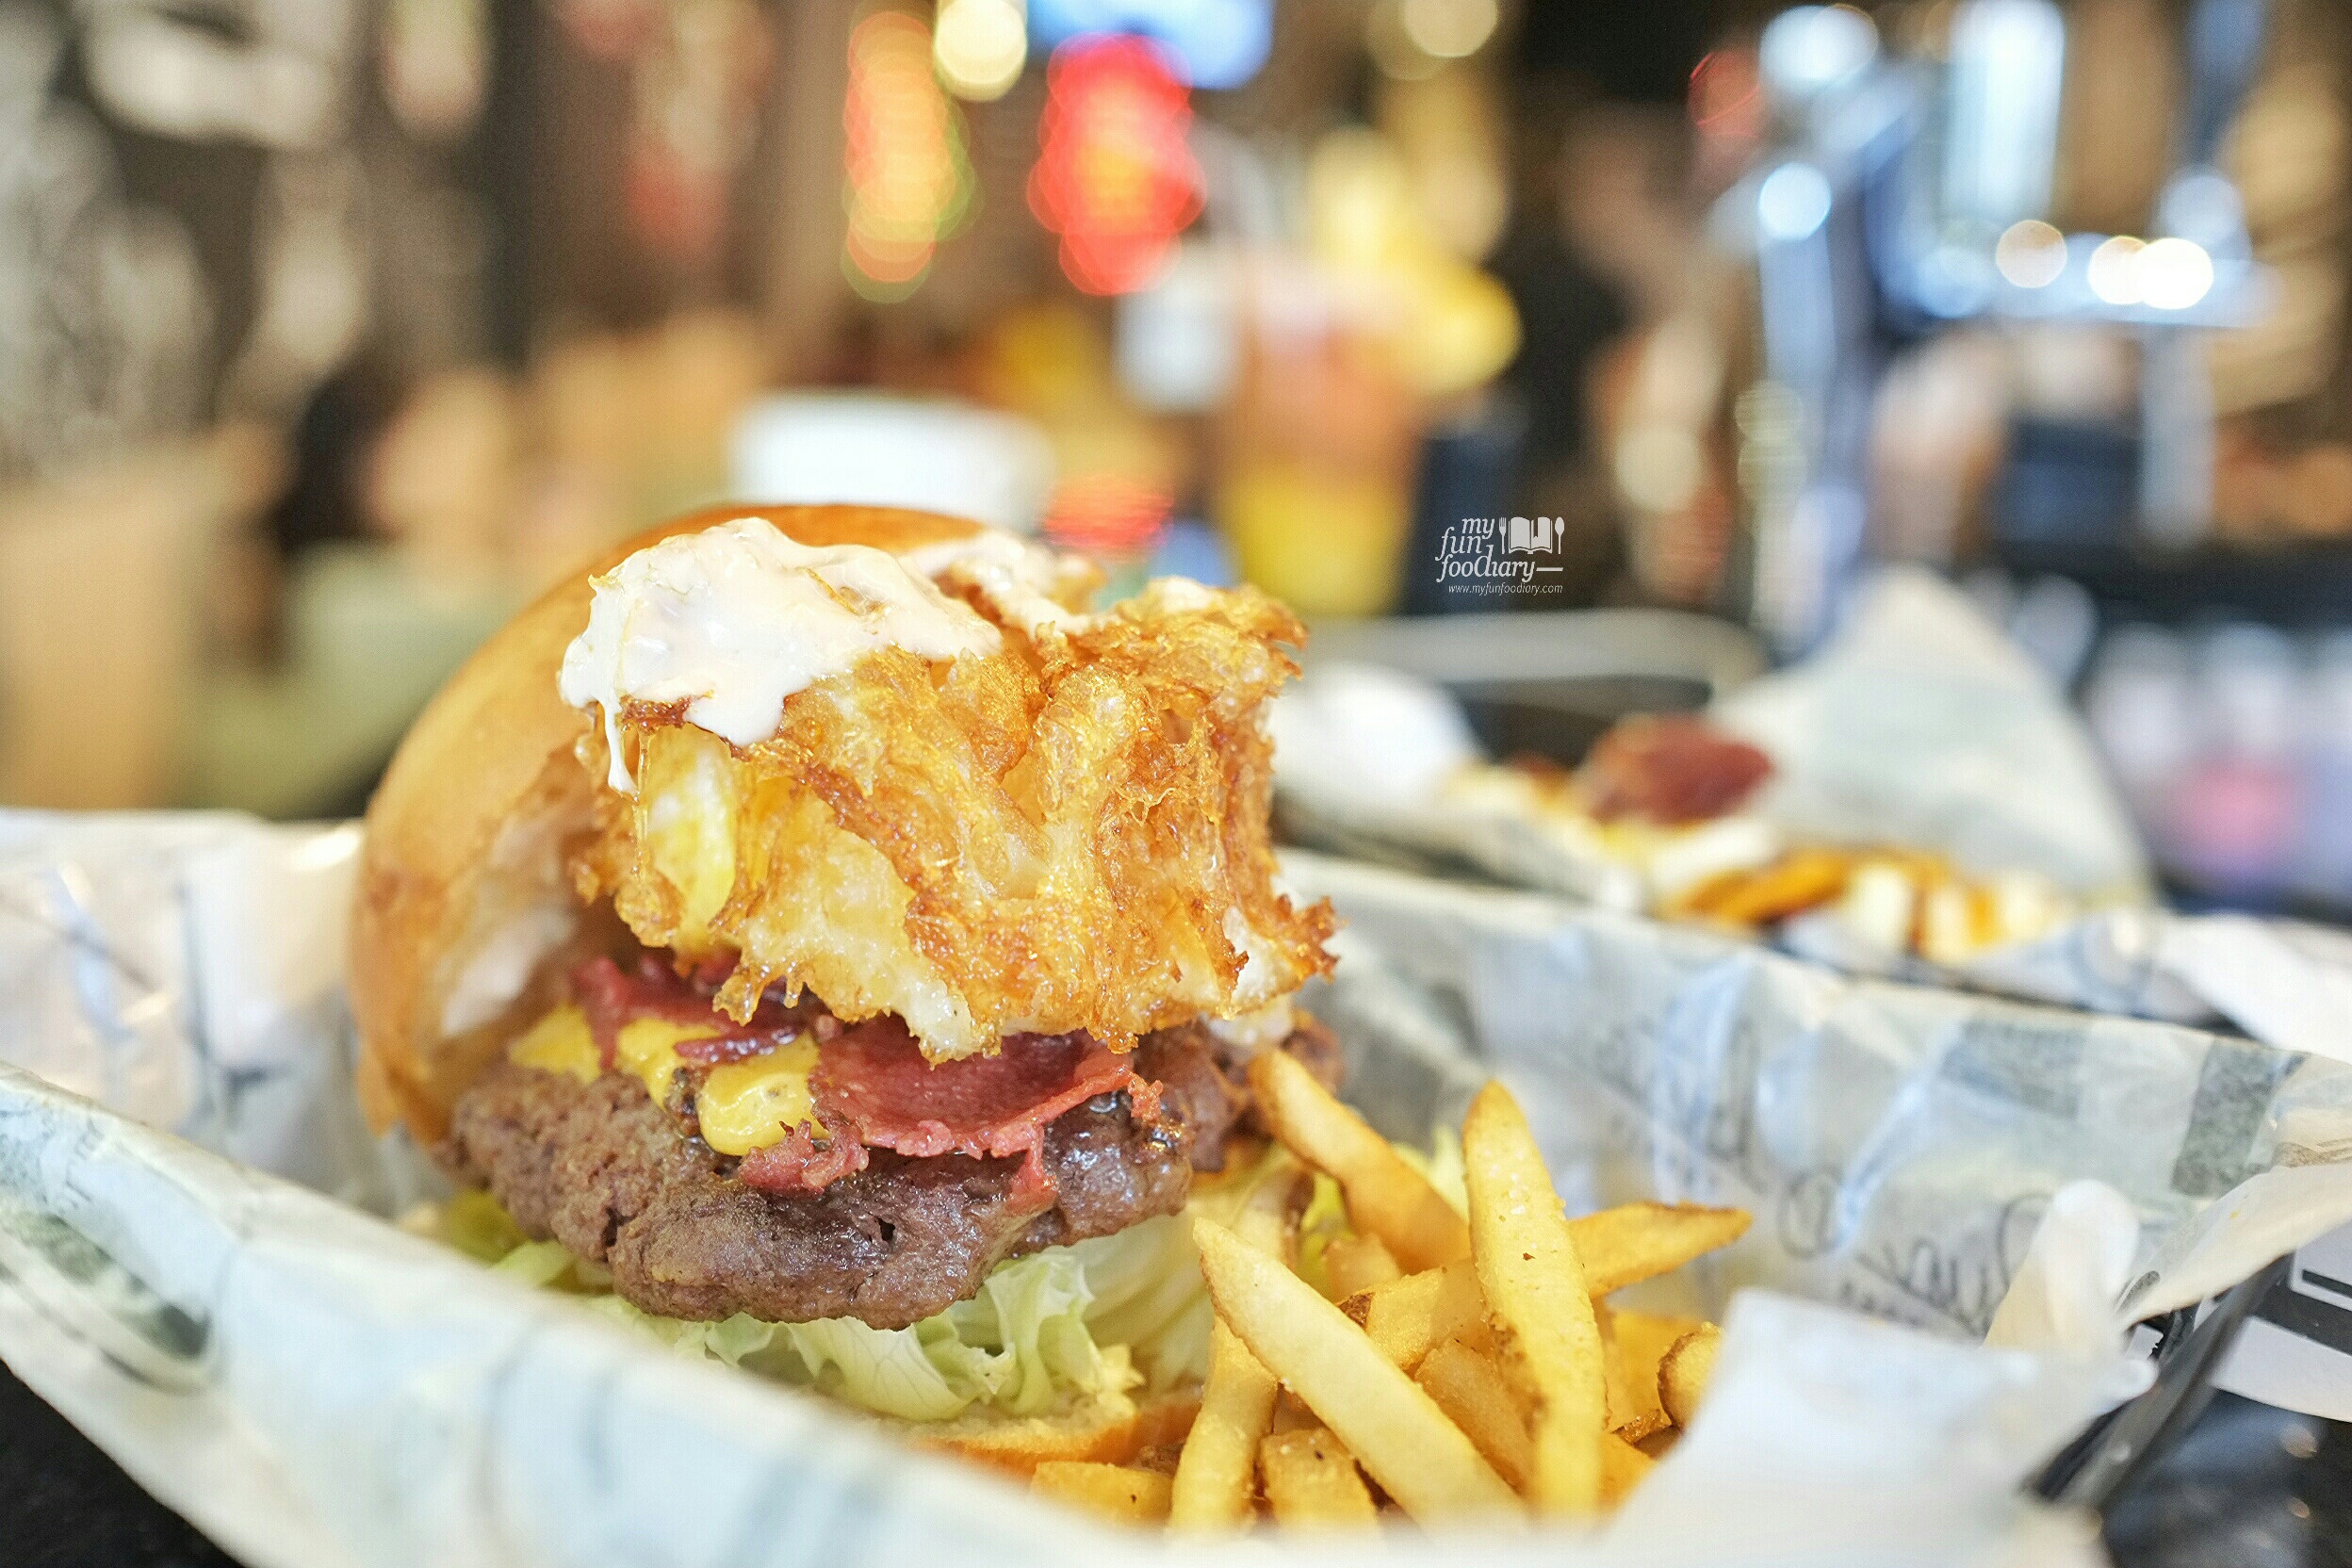 Heart Attack Burger at Bun n Bite Kelapa Gading by Myfunfoodiary